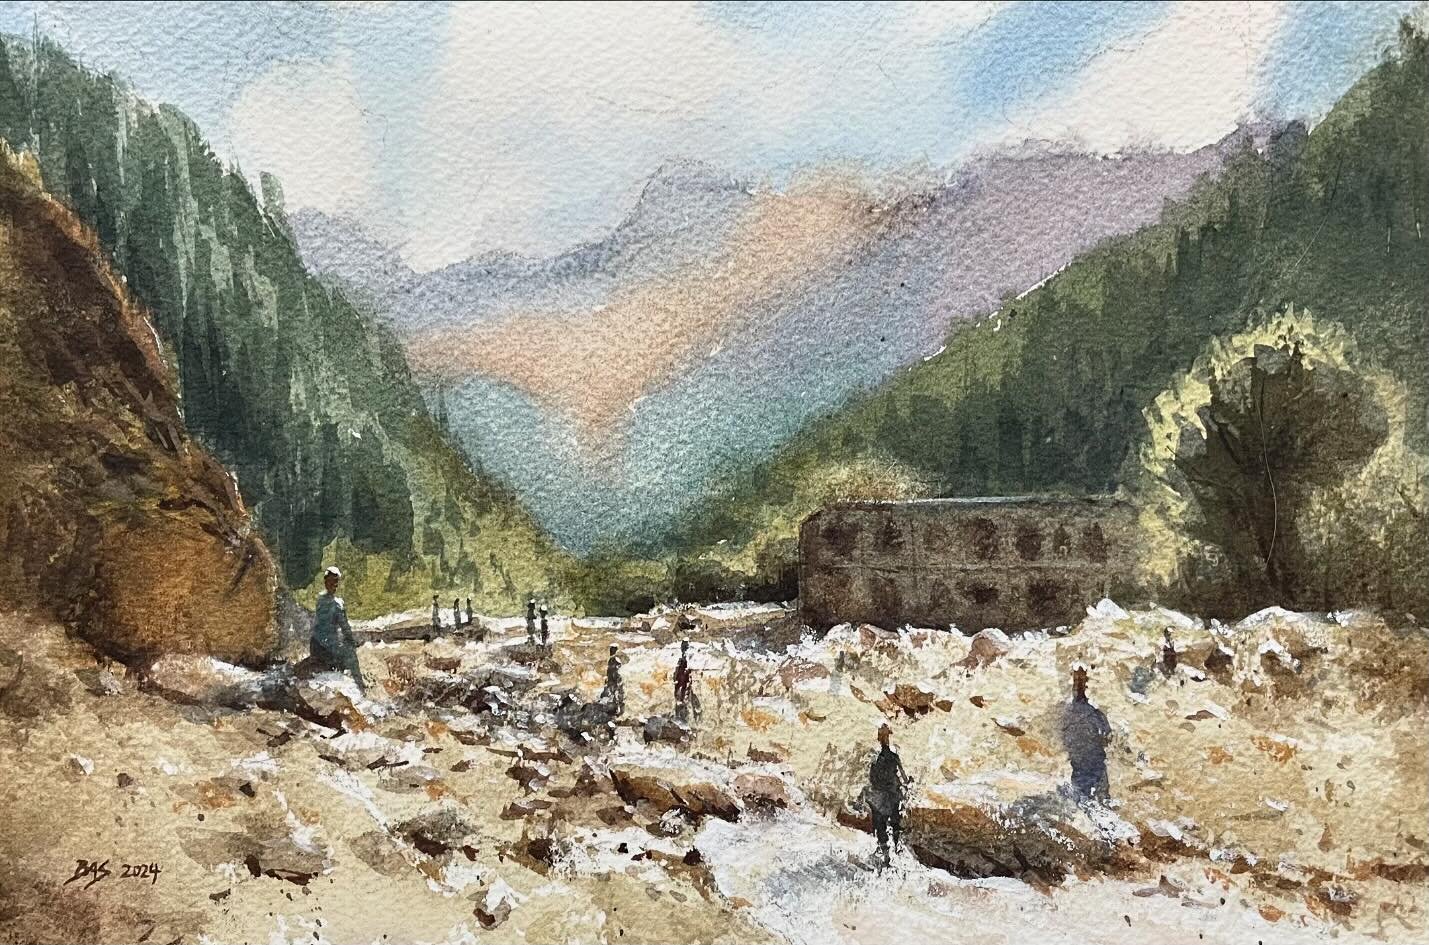 Scene from northern Pakistan.